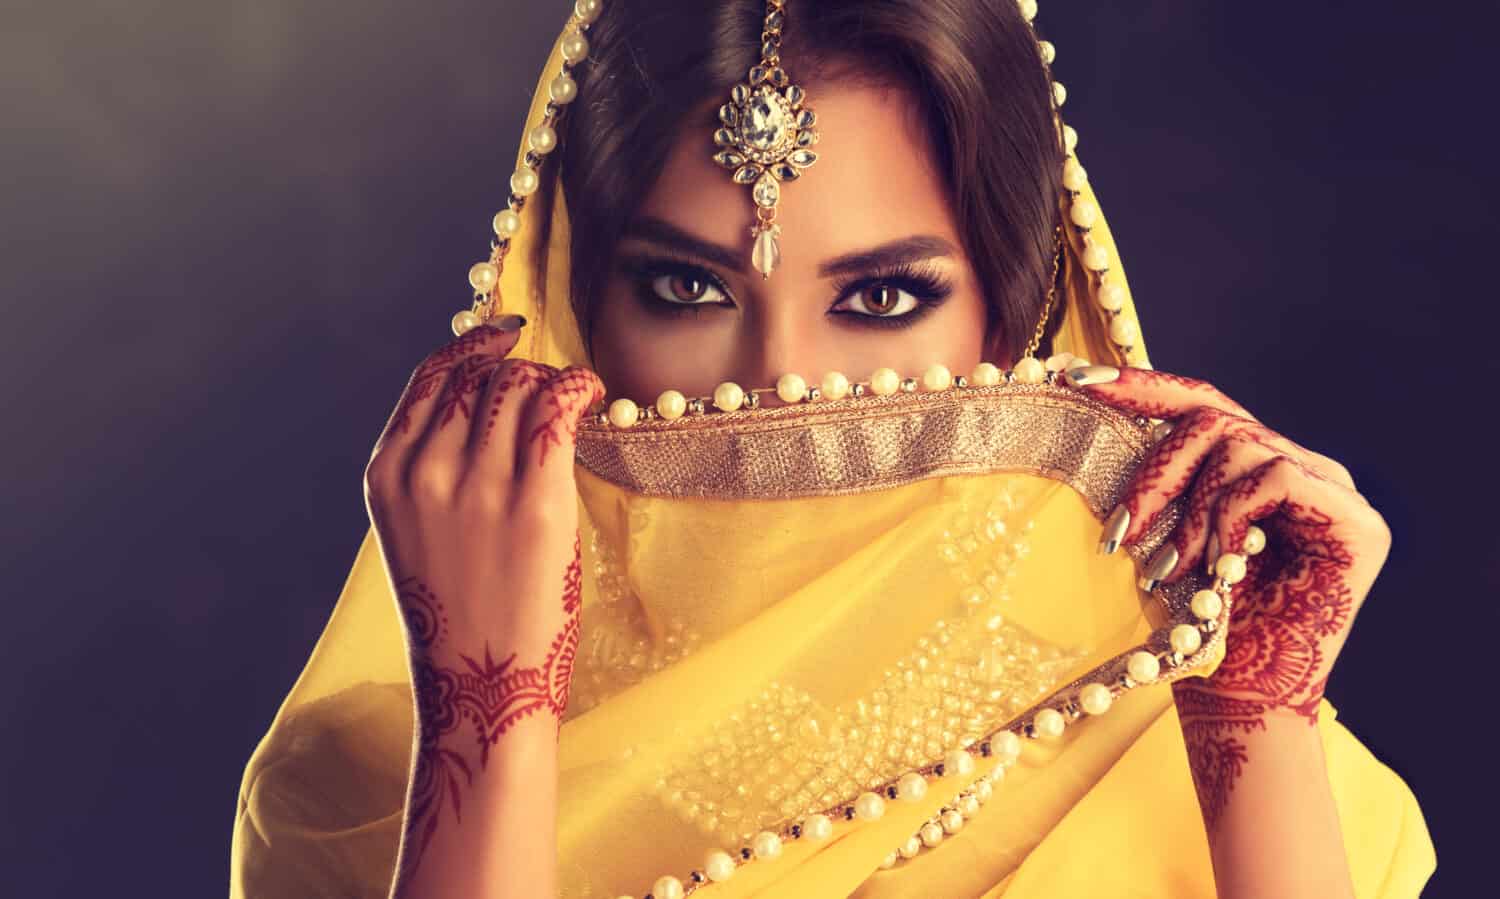 Beautiful indian girl . Young hindu woman model with tatoo mehndi and kundan jewelry . Traditional Indian costume yellow saree . Indian or Muslim woman covers her face.